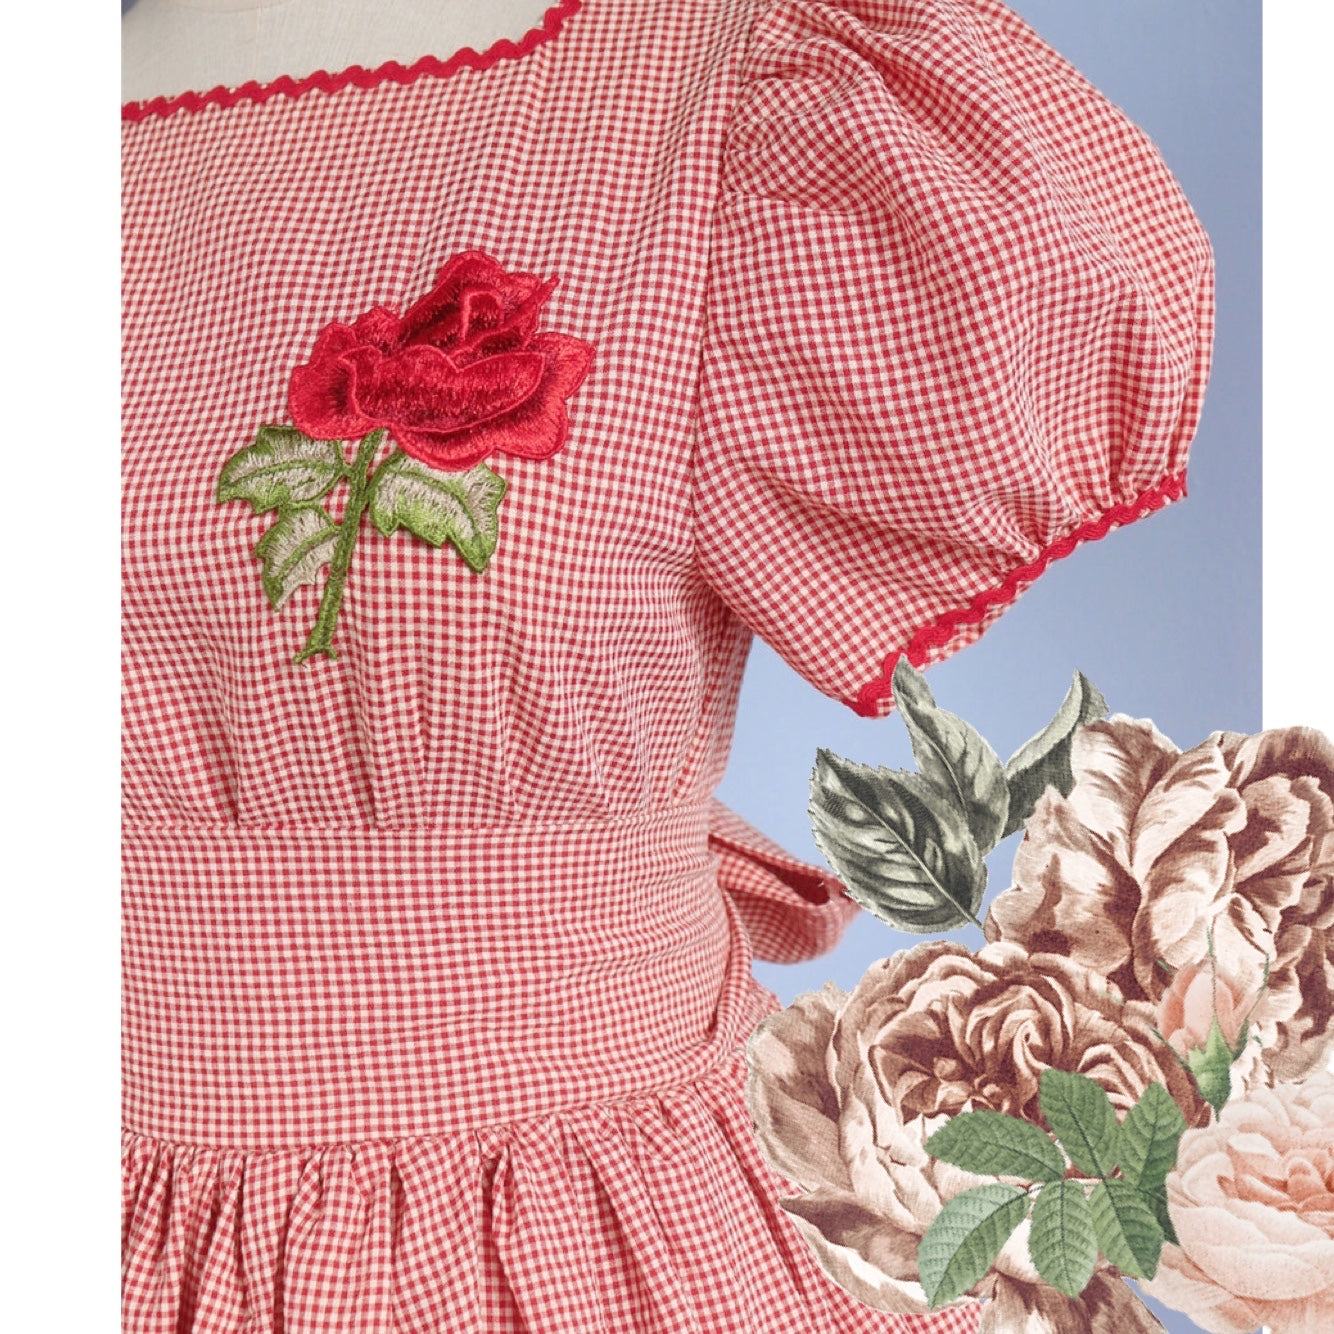 Rose Cupcake Plaid Rose Embroidery Cottagecore Dress 